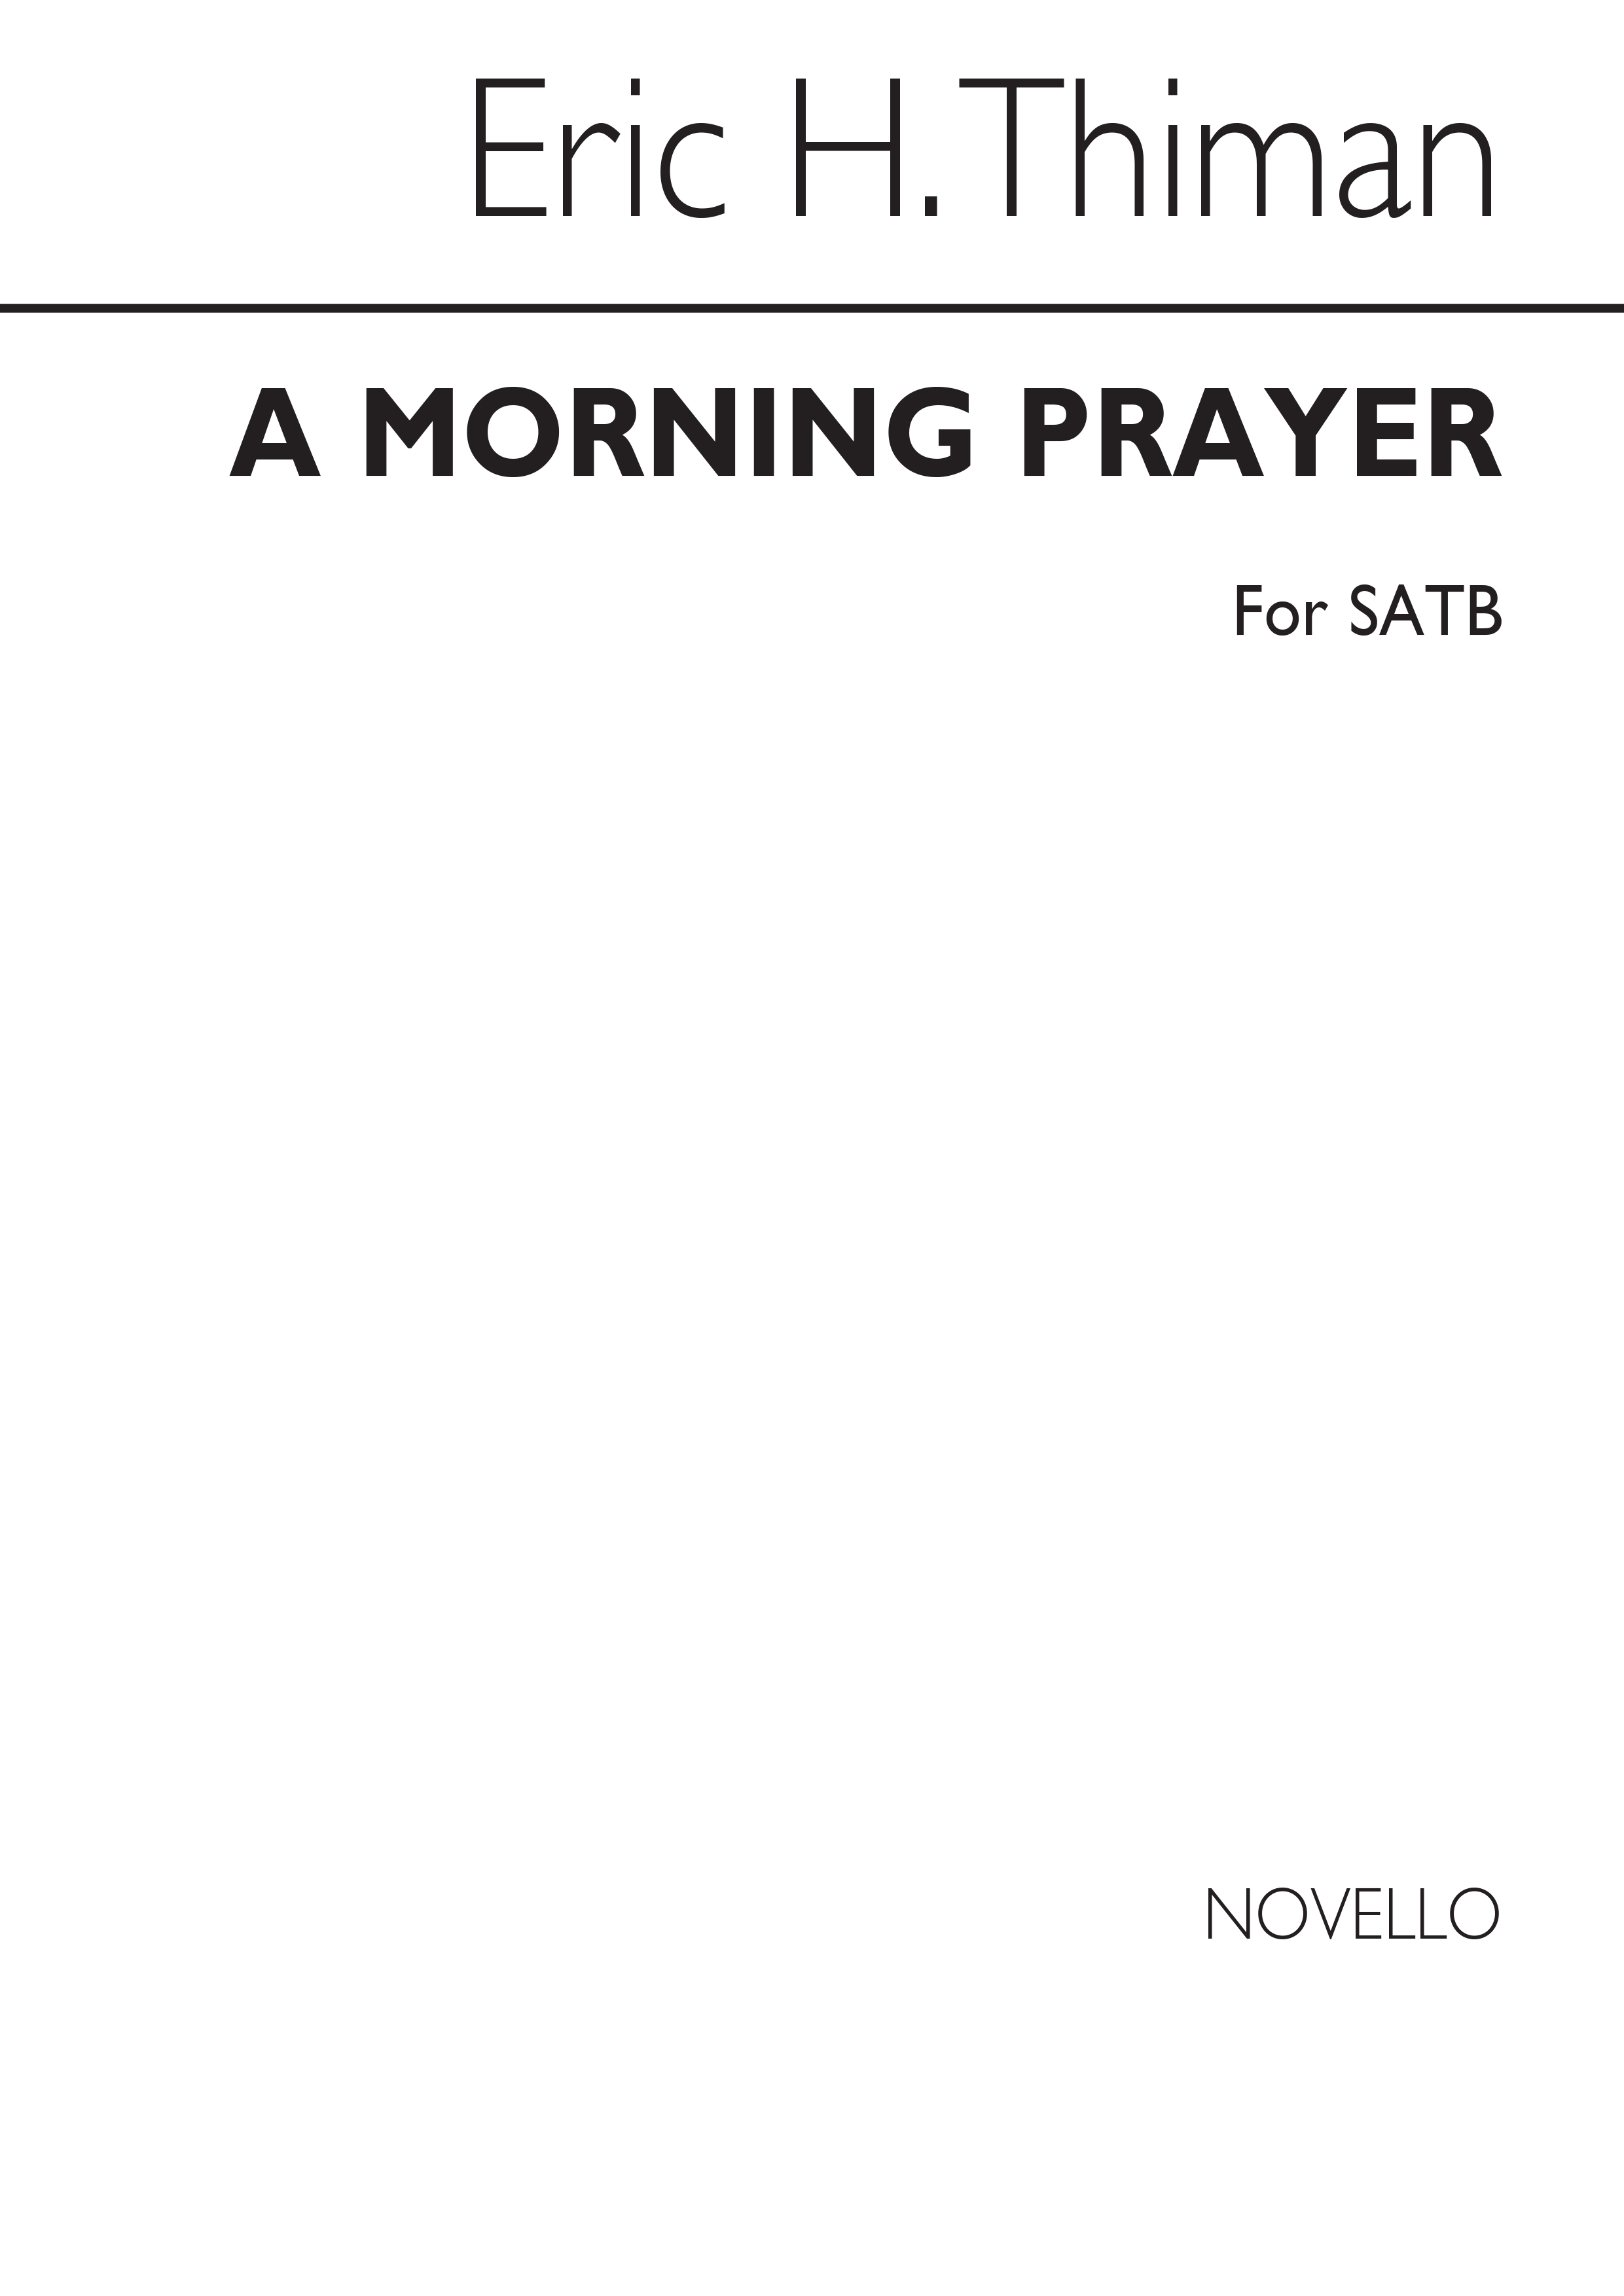 Thiman: Morning Prayer for SATB Chorus